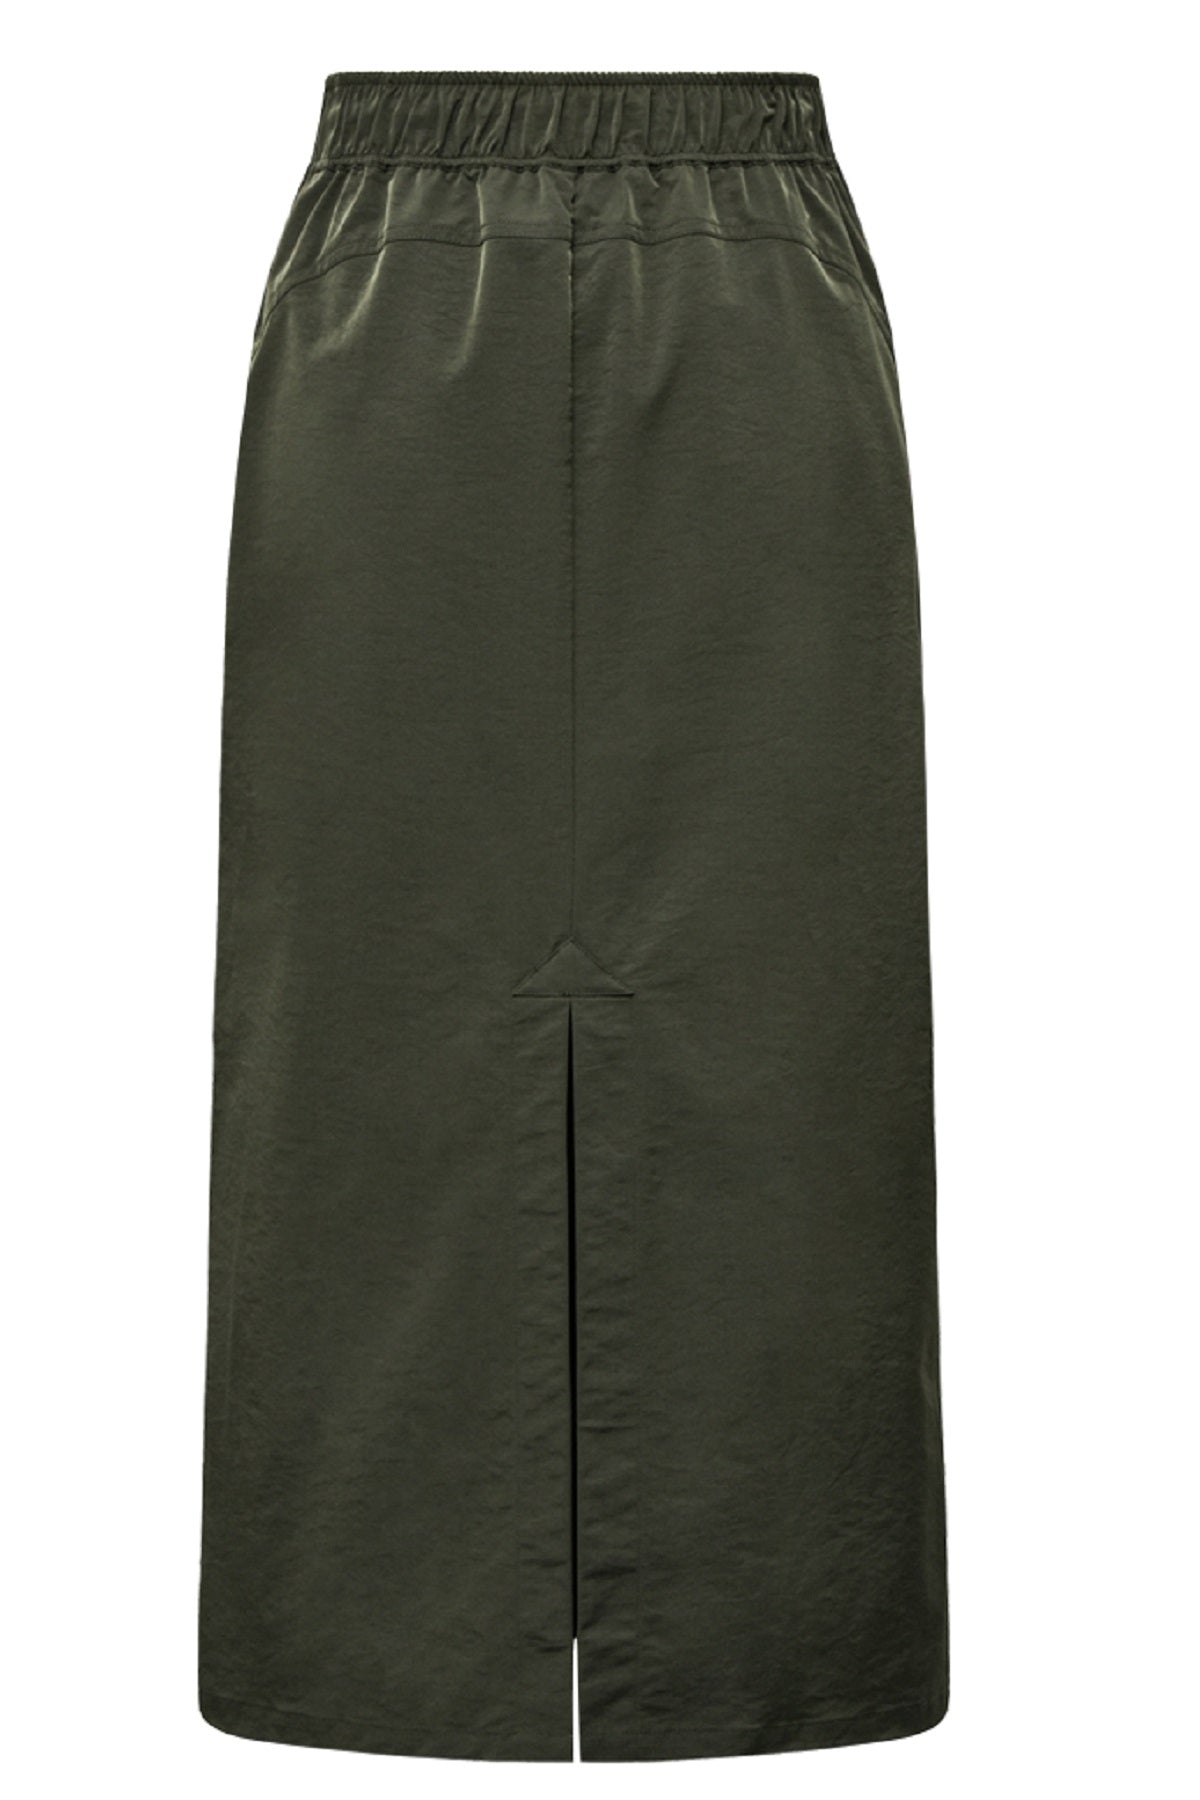 Gossia MayGO Skirt, Dark Army